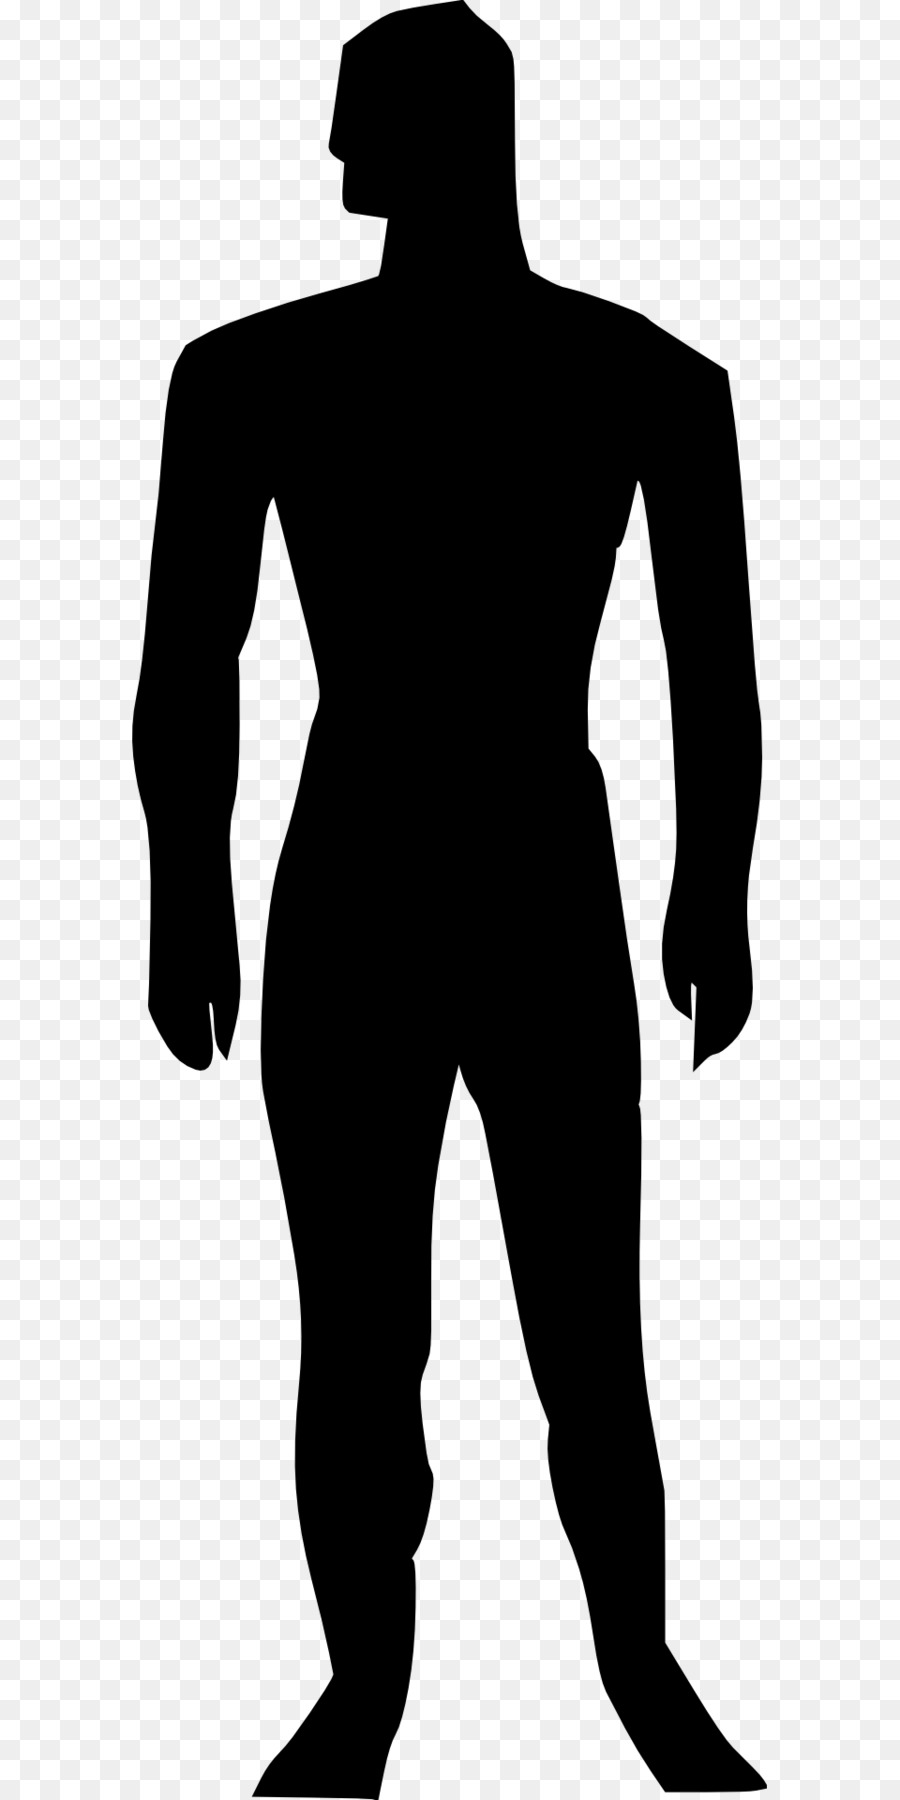 Human body Homo sapiens Human figure Silhouette Clip art - man silhouette png download - 960*1920 - Free Transparent  png Download.